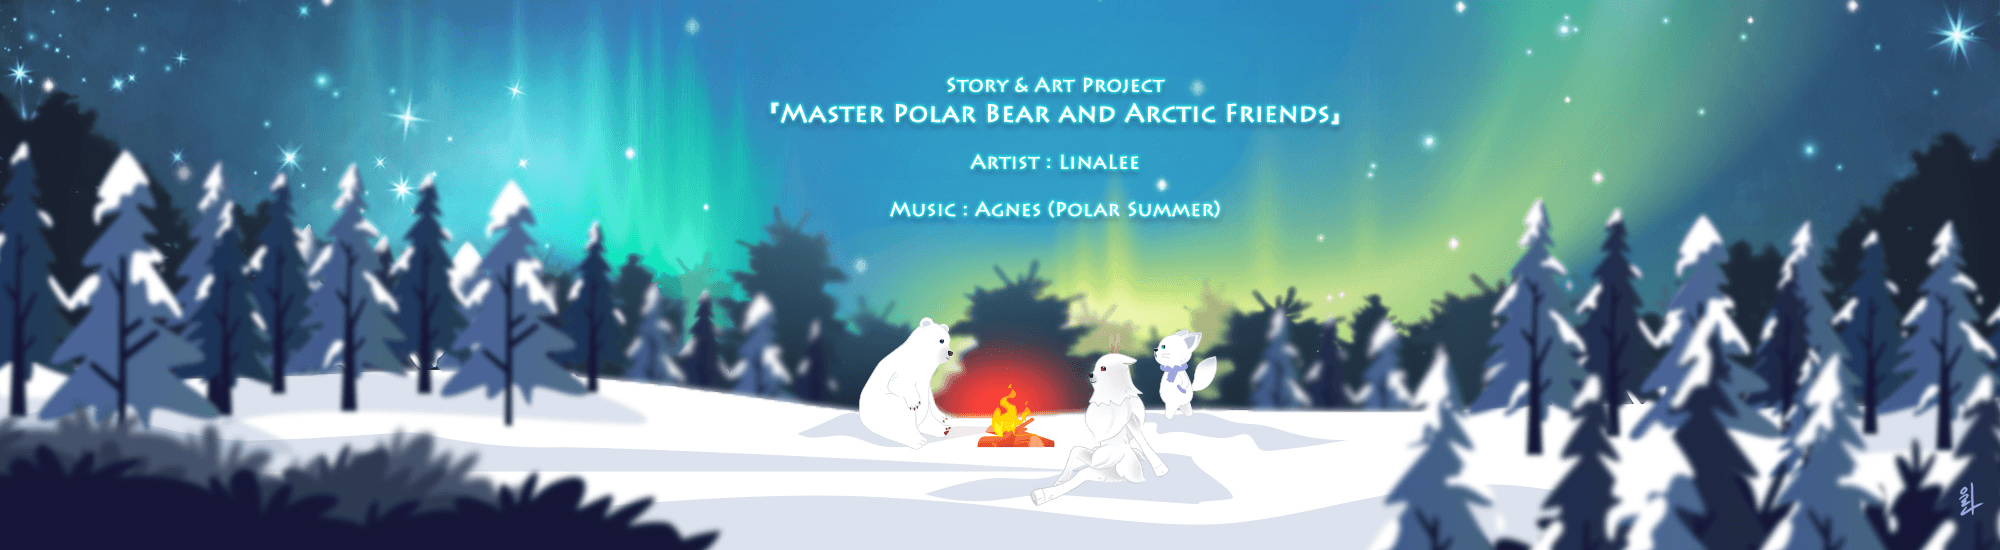 Master Polar Bear and Arctic Friends